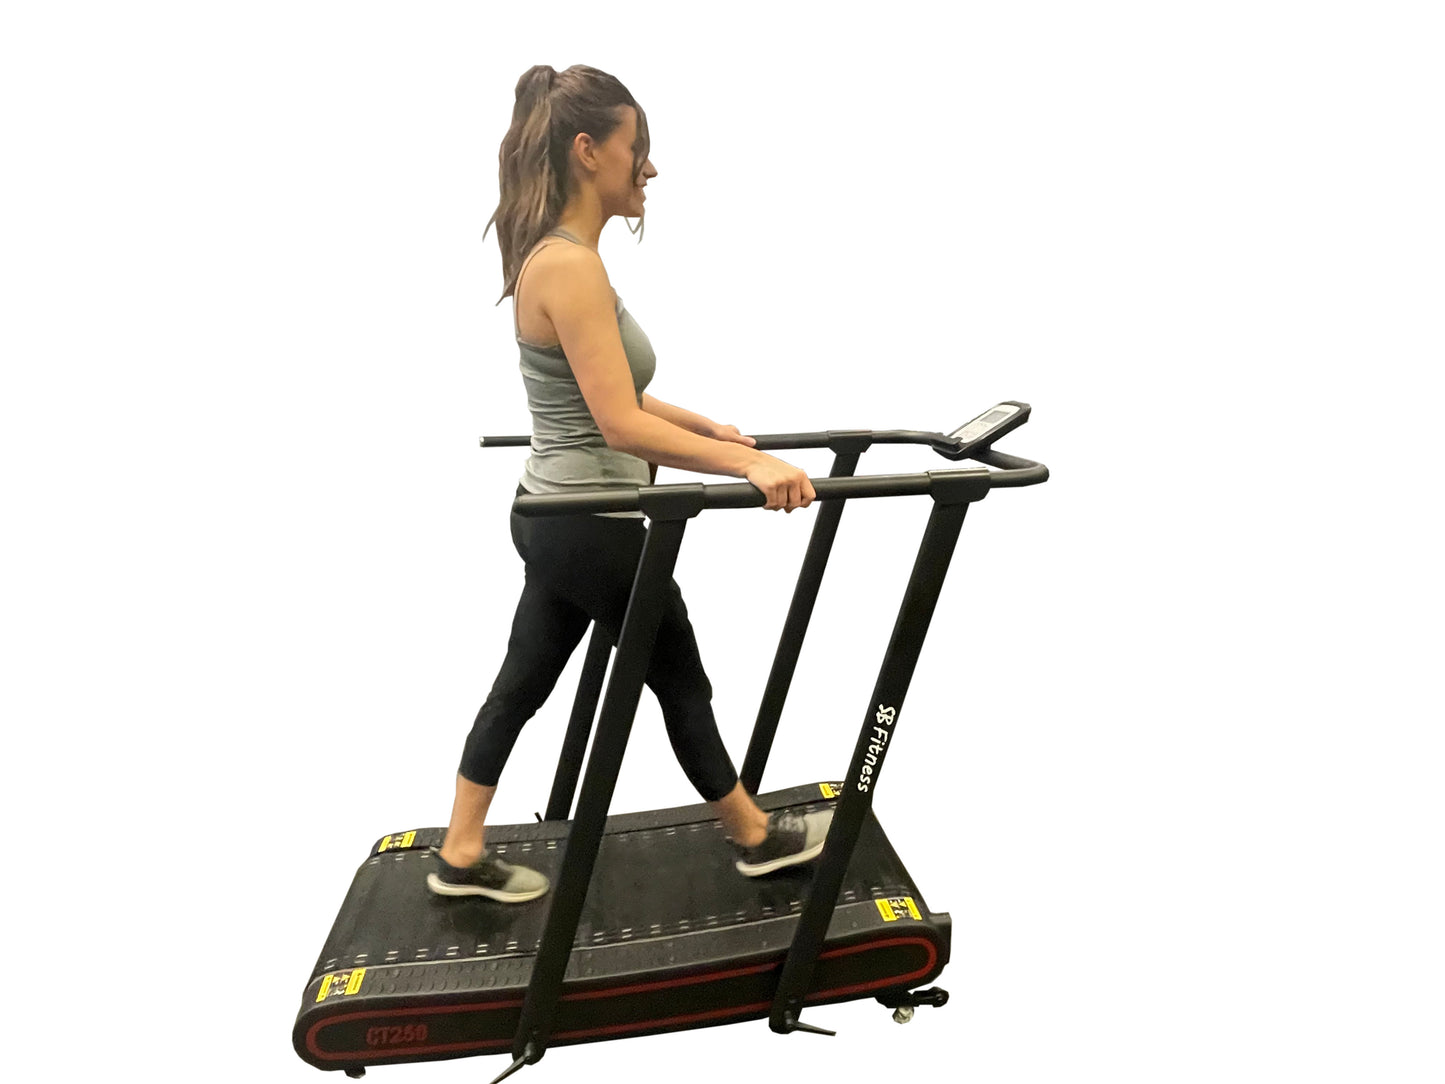 SB Fitness CT250 Self-Generated Curved Walking Treadmill